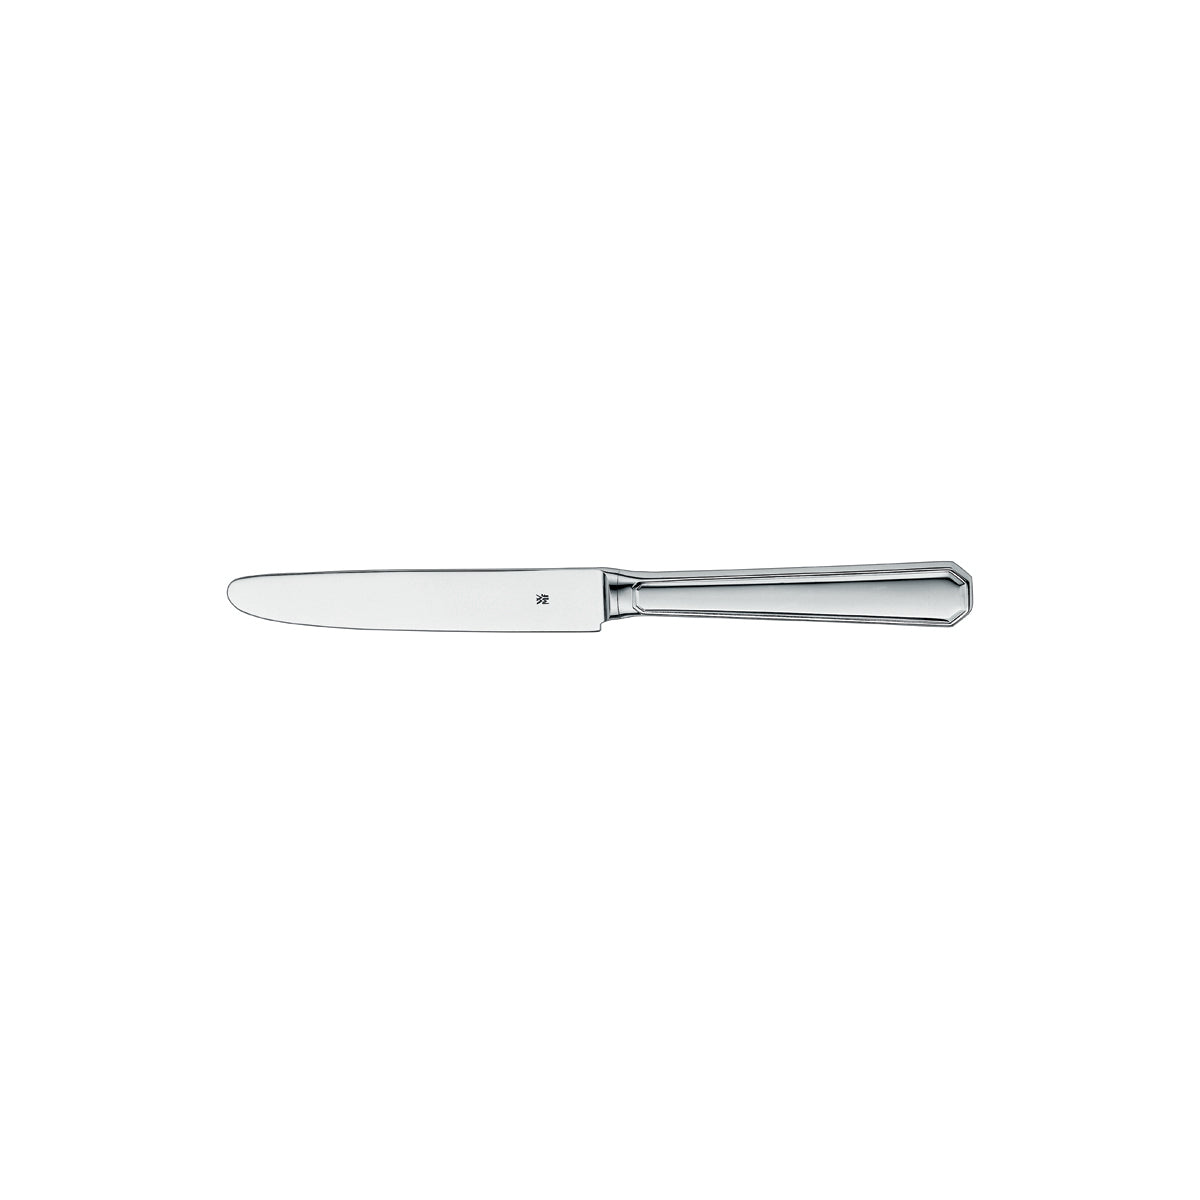 12.6203.6049 WMF Mondial Table Knife Stainless Steel Tomkin Australia Hospitality Supplies